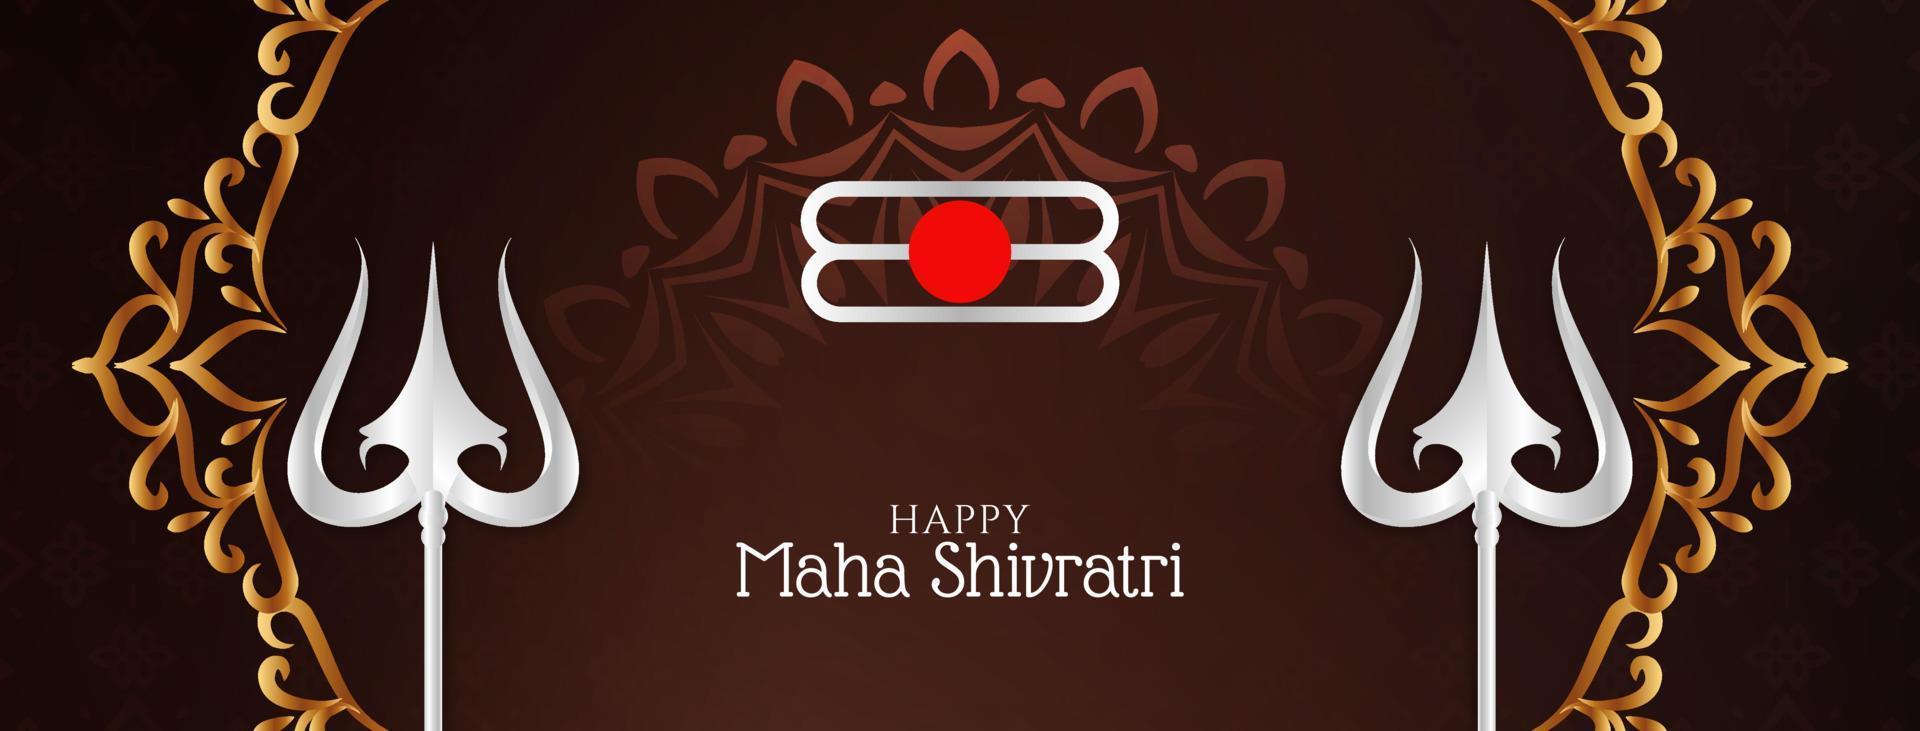 Happy Maha Shivratri Festival klassisches mythologisches Banner vektor